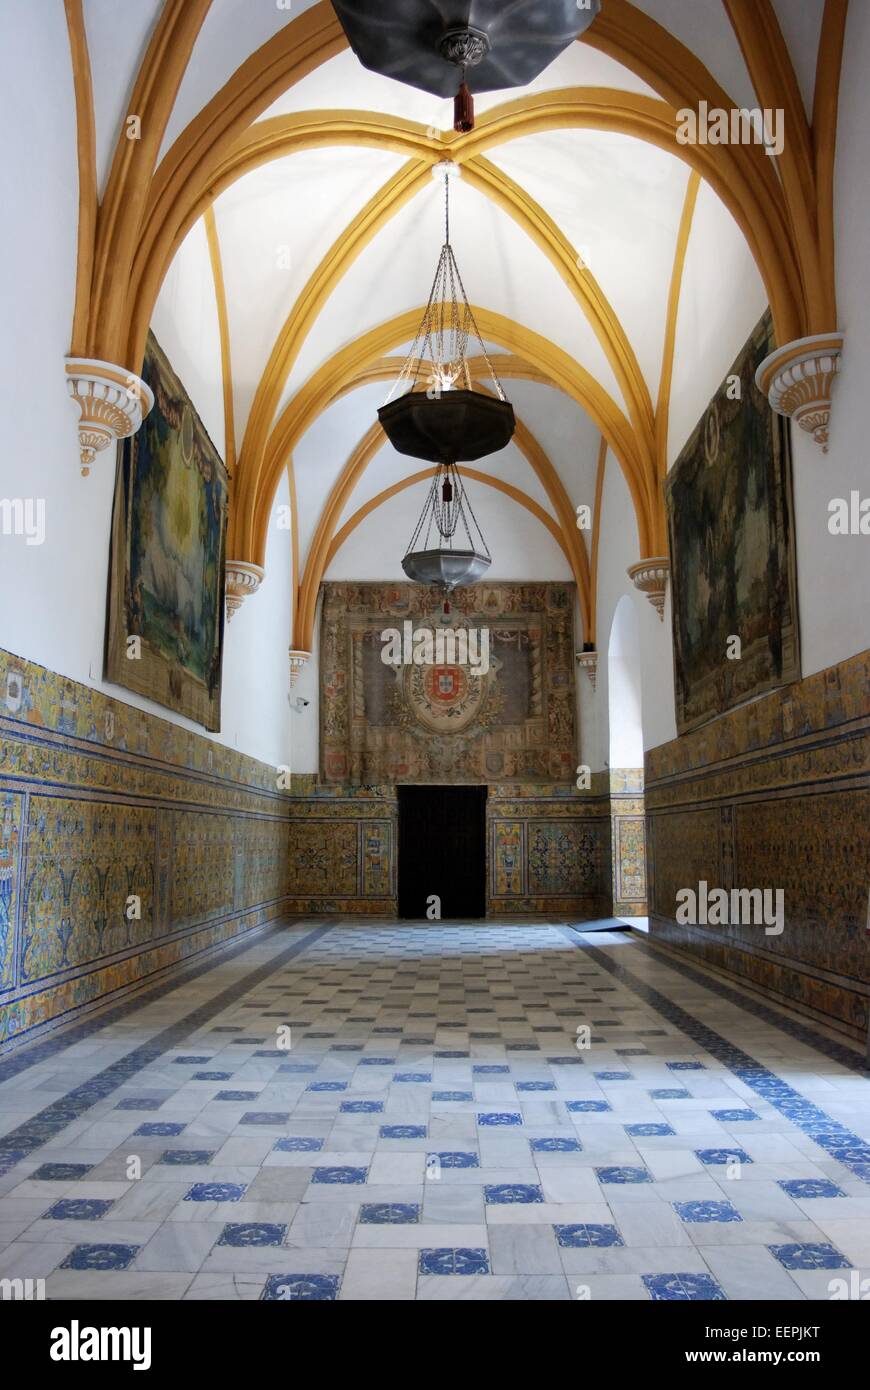 Blick entlang der Salon De La Emperador im Inneren des Schlosses der Provinz Könige, Sevilla, Sevilla, Andalusien, Spanien, Westeuropa. Stockfoto